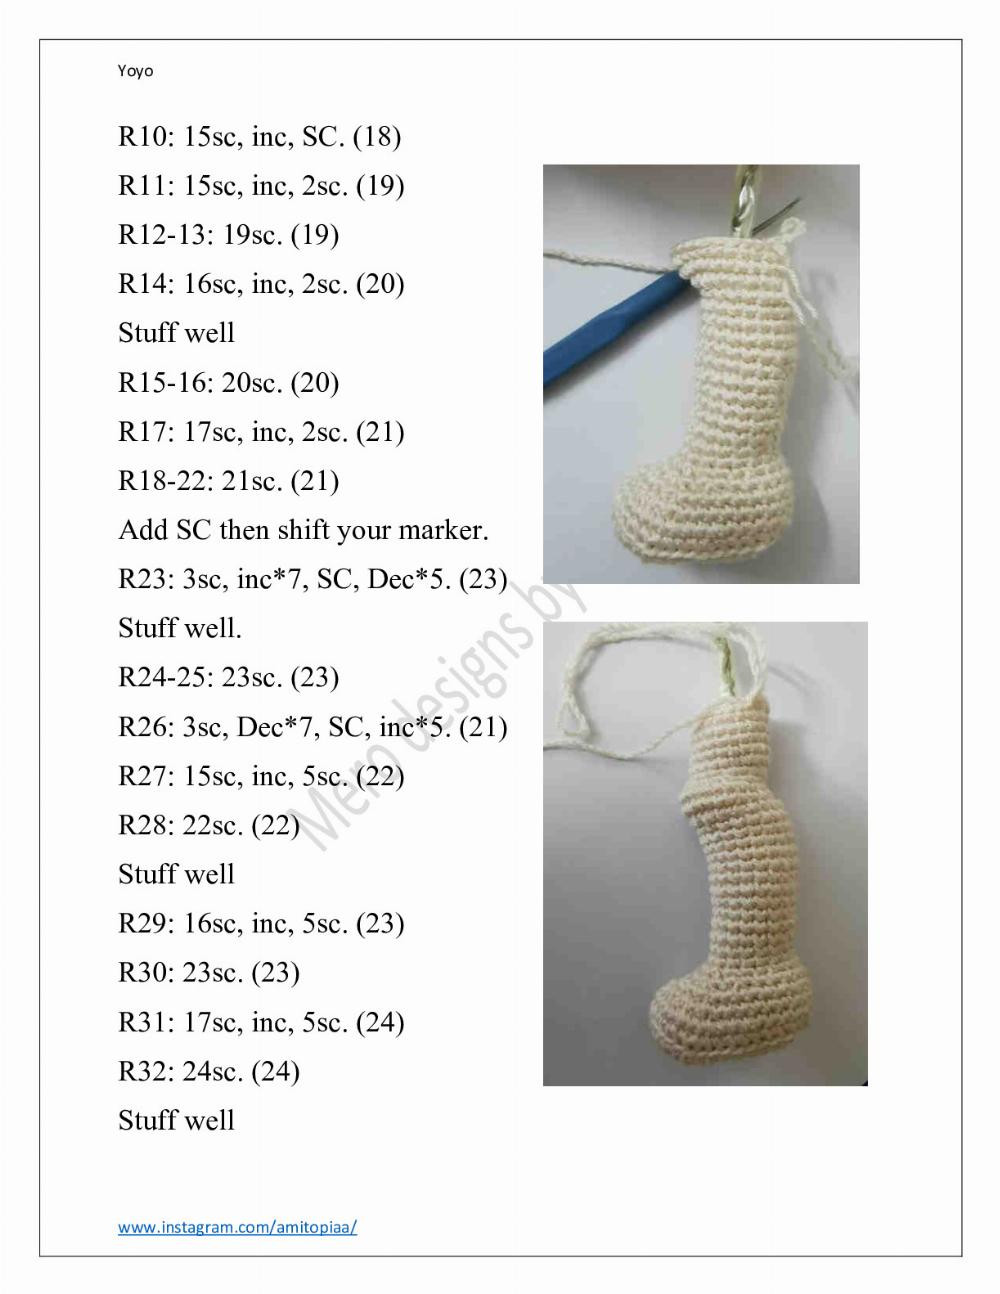 Yoyo YOYO crochet pattern